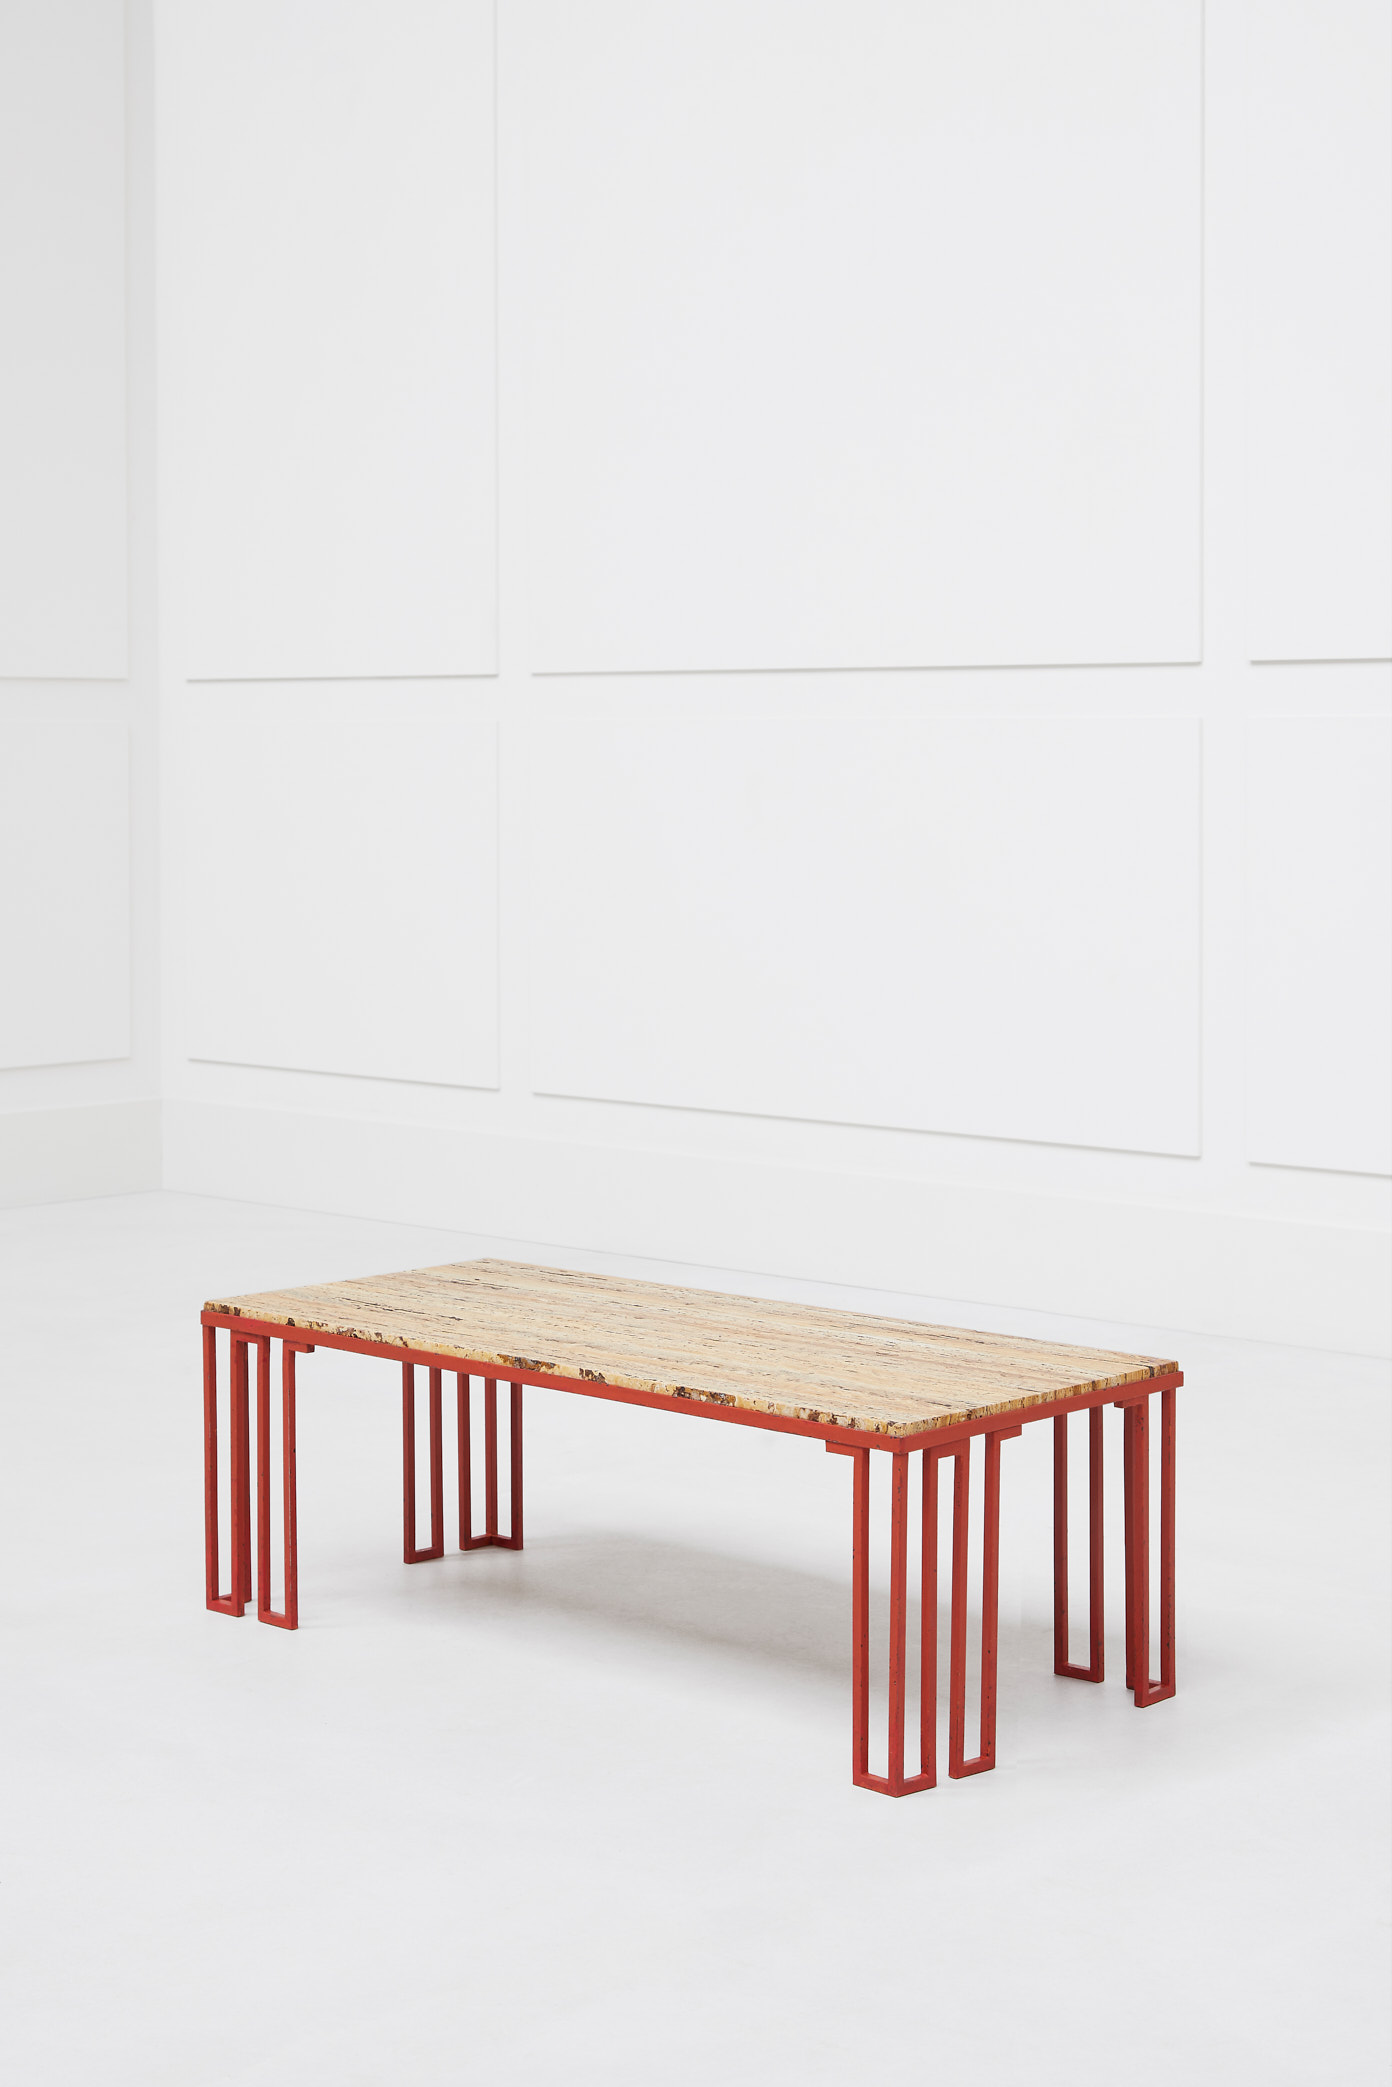 Jean Royère, “Créneaux” coffee table, vue 01